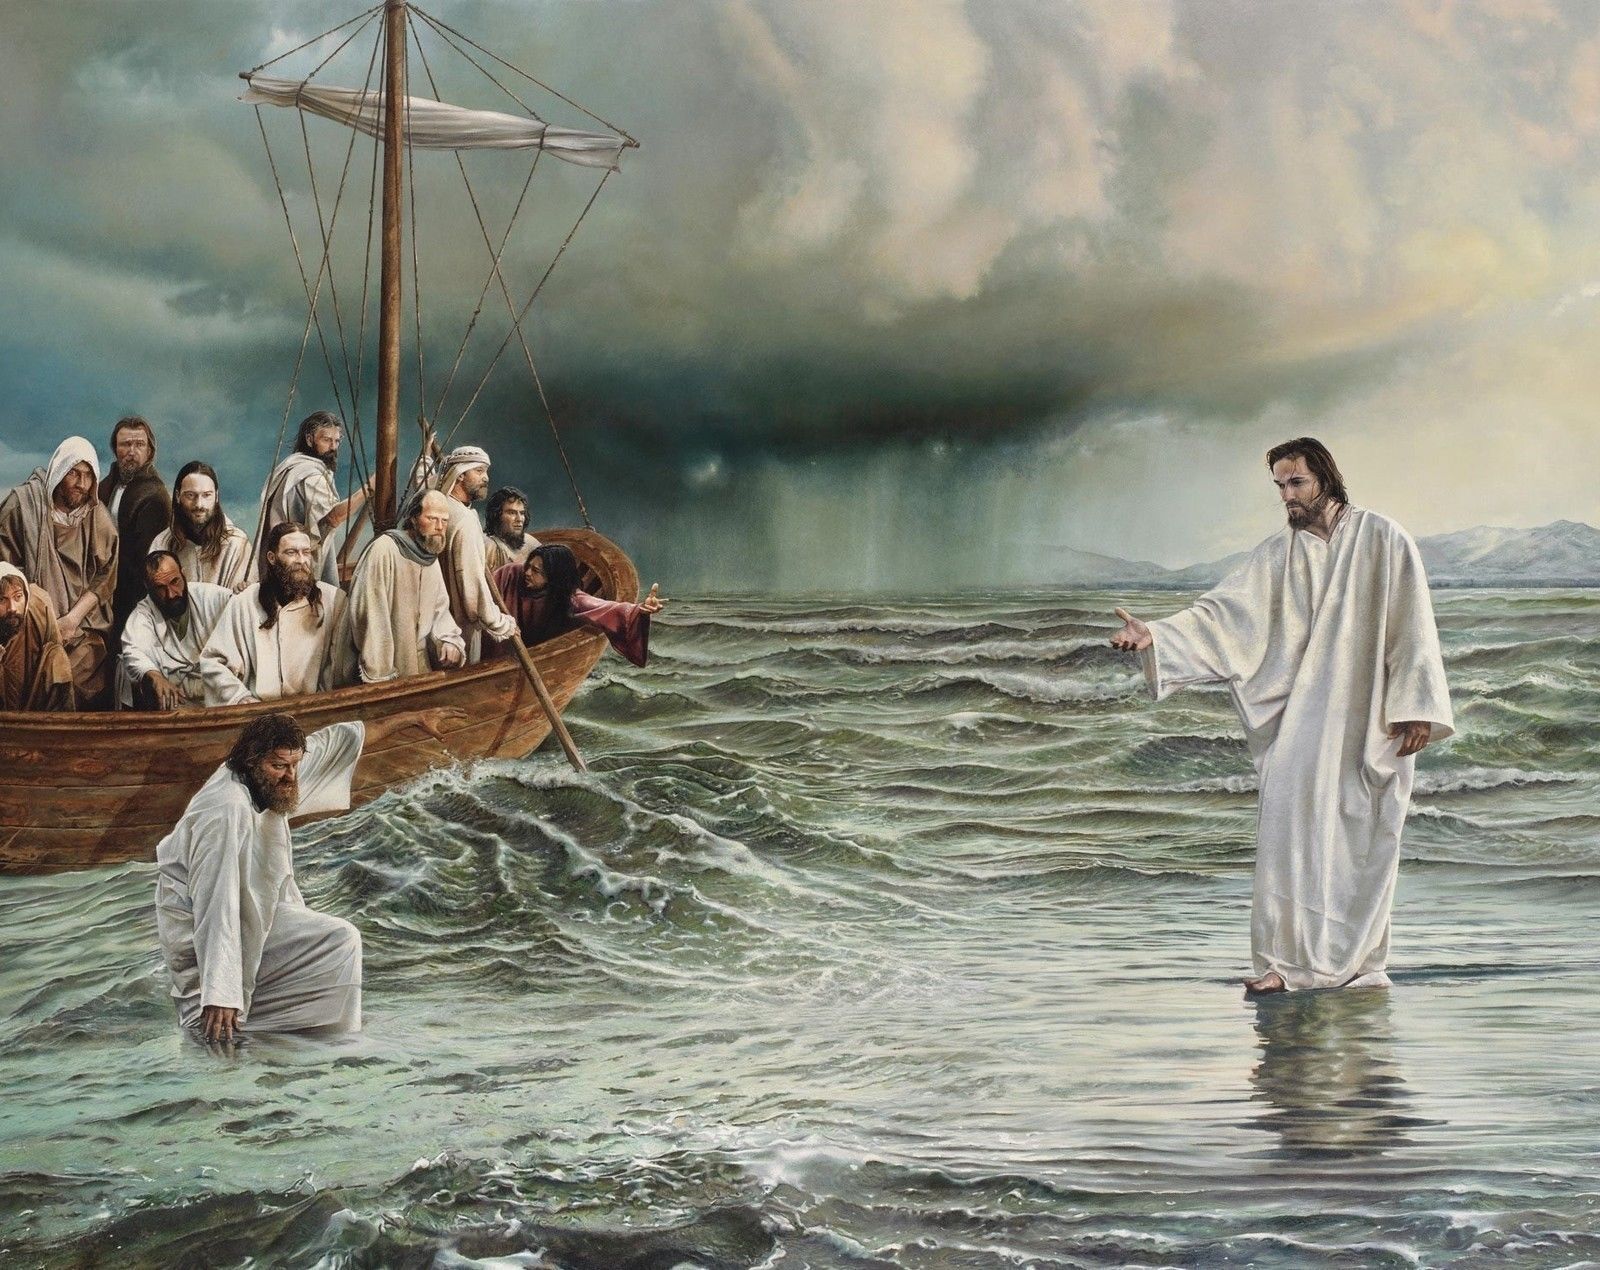 JESUS WALKING ON WATER 8X10 PHOTO ART PRINT PICTURE RELIGION CHRISTIAN